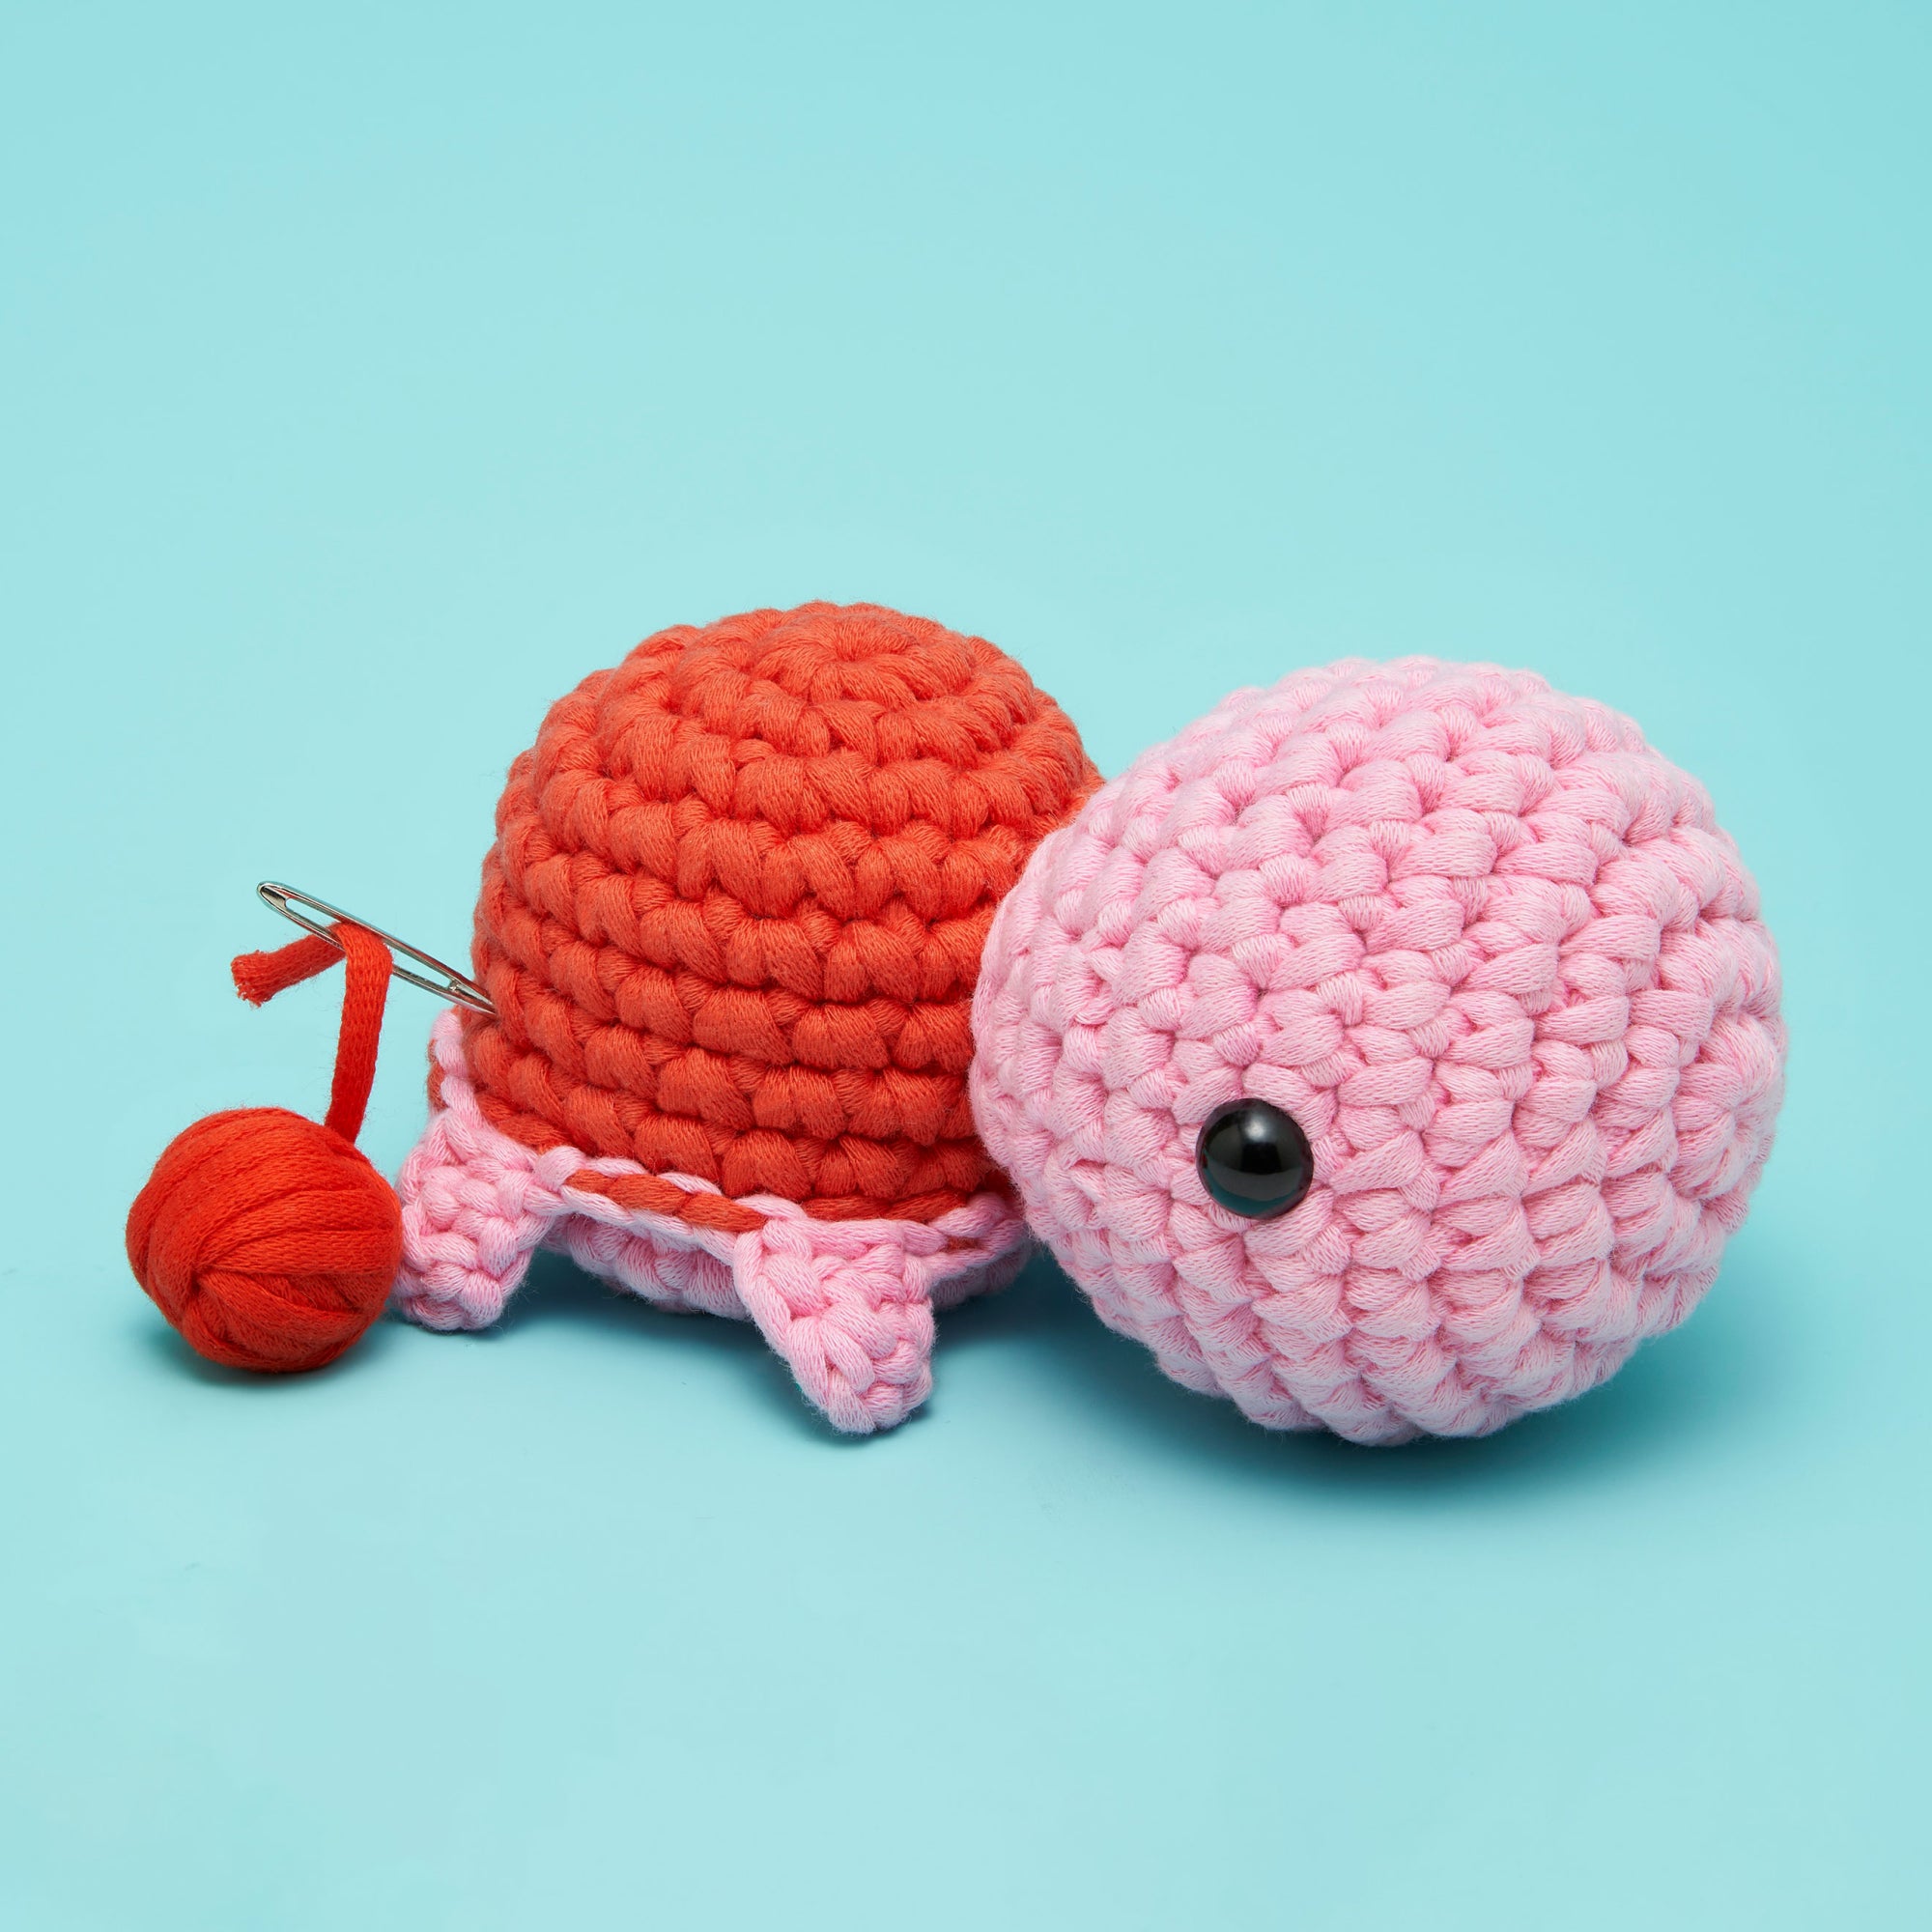 The Woobles Beginner Crochet Amigurumi Kit - Axolotl  Crochet amigurumi,  Crochet for beginners, Crochet projects